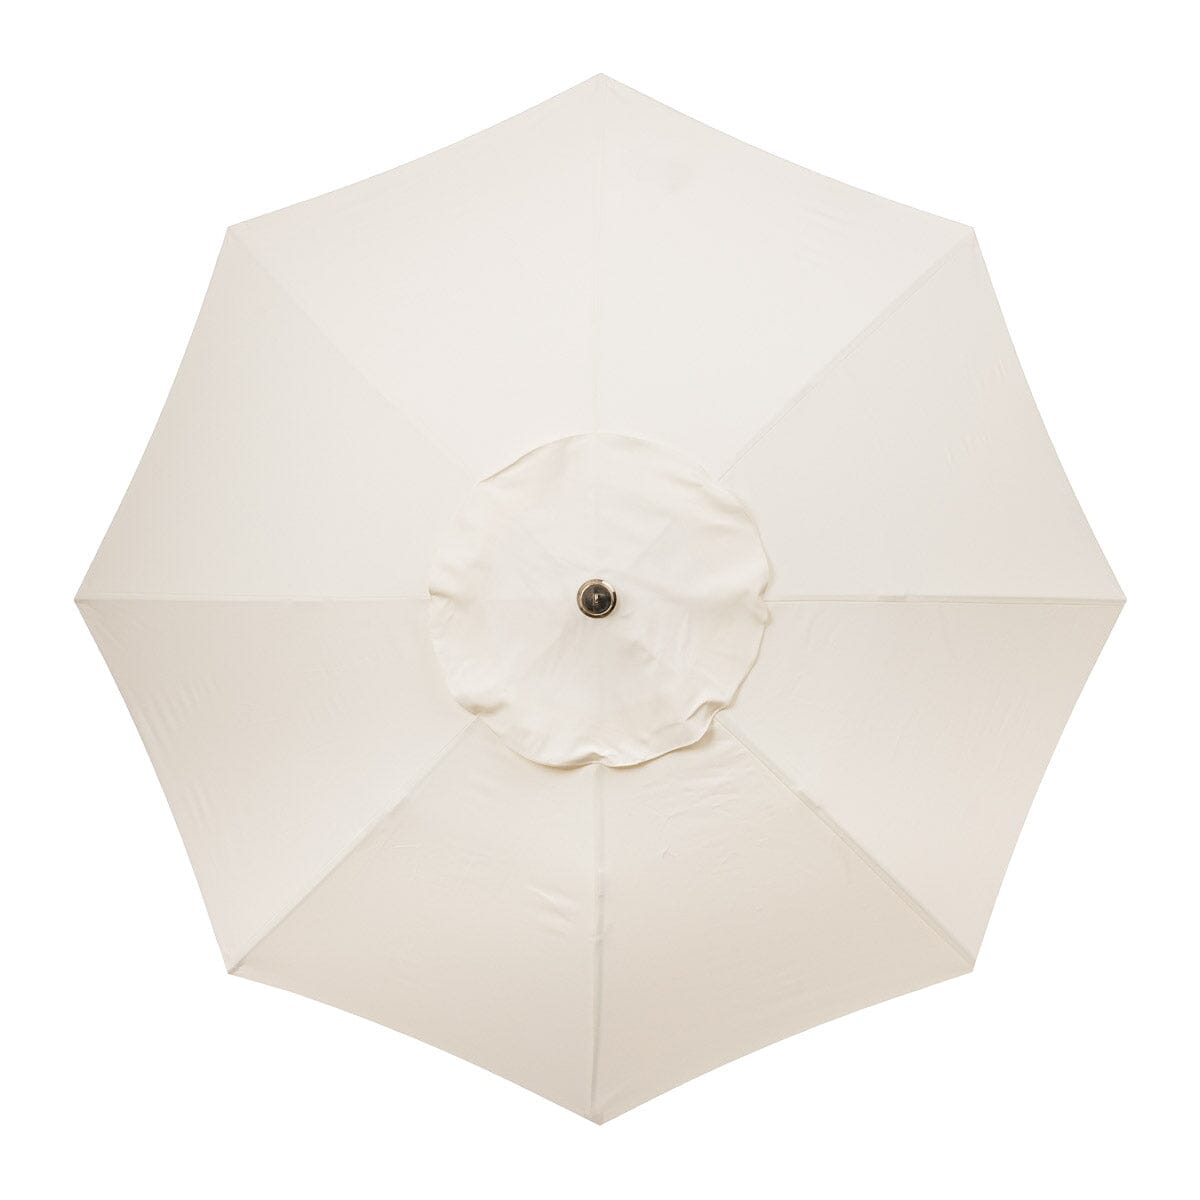 The Club Umbrella - Antique White Club Umbrella Business & Pleasure Co. 